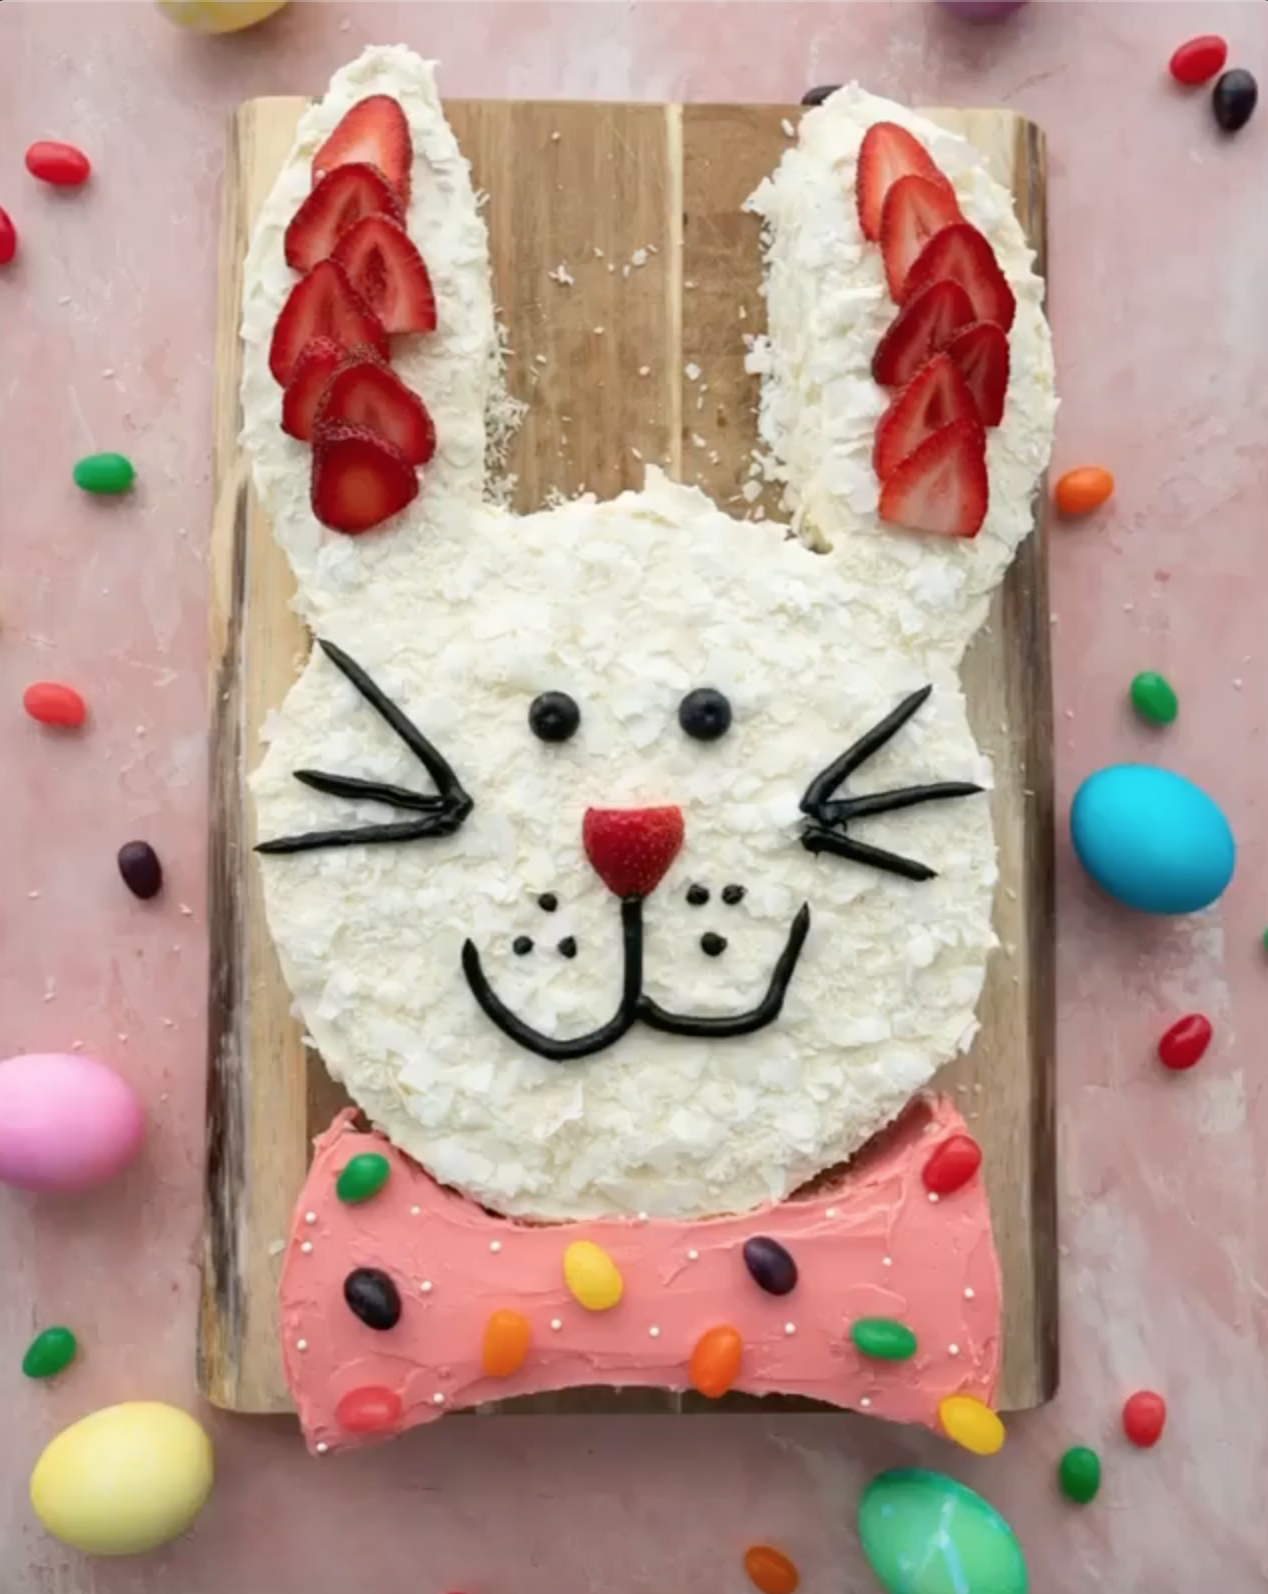 Bunny Cake Recipe - Crinkled Cookbook